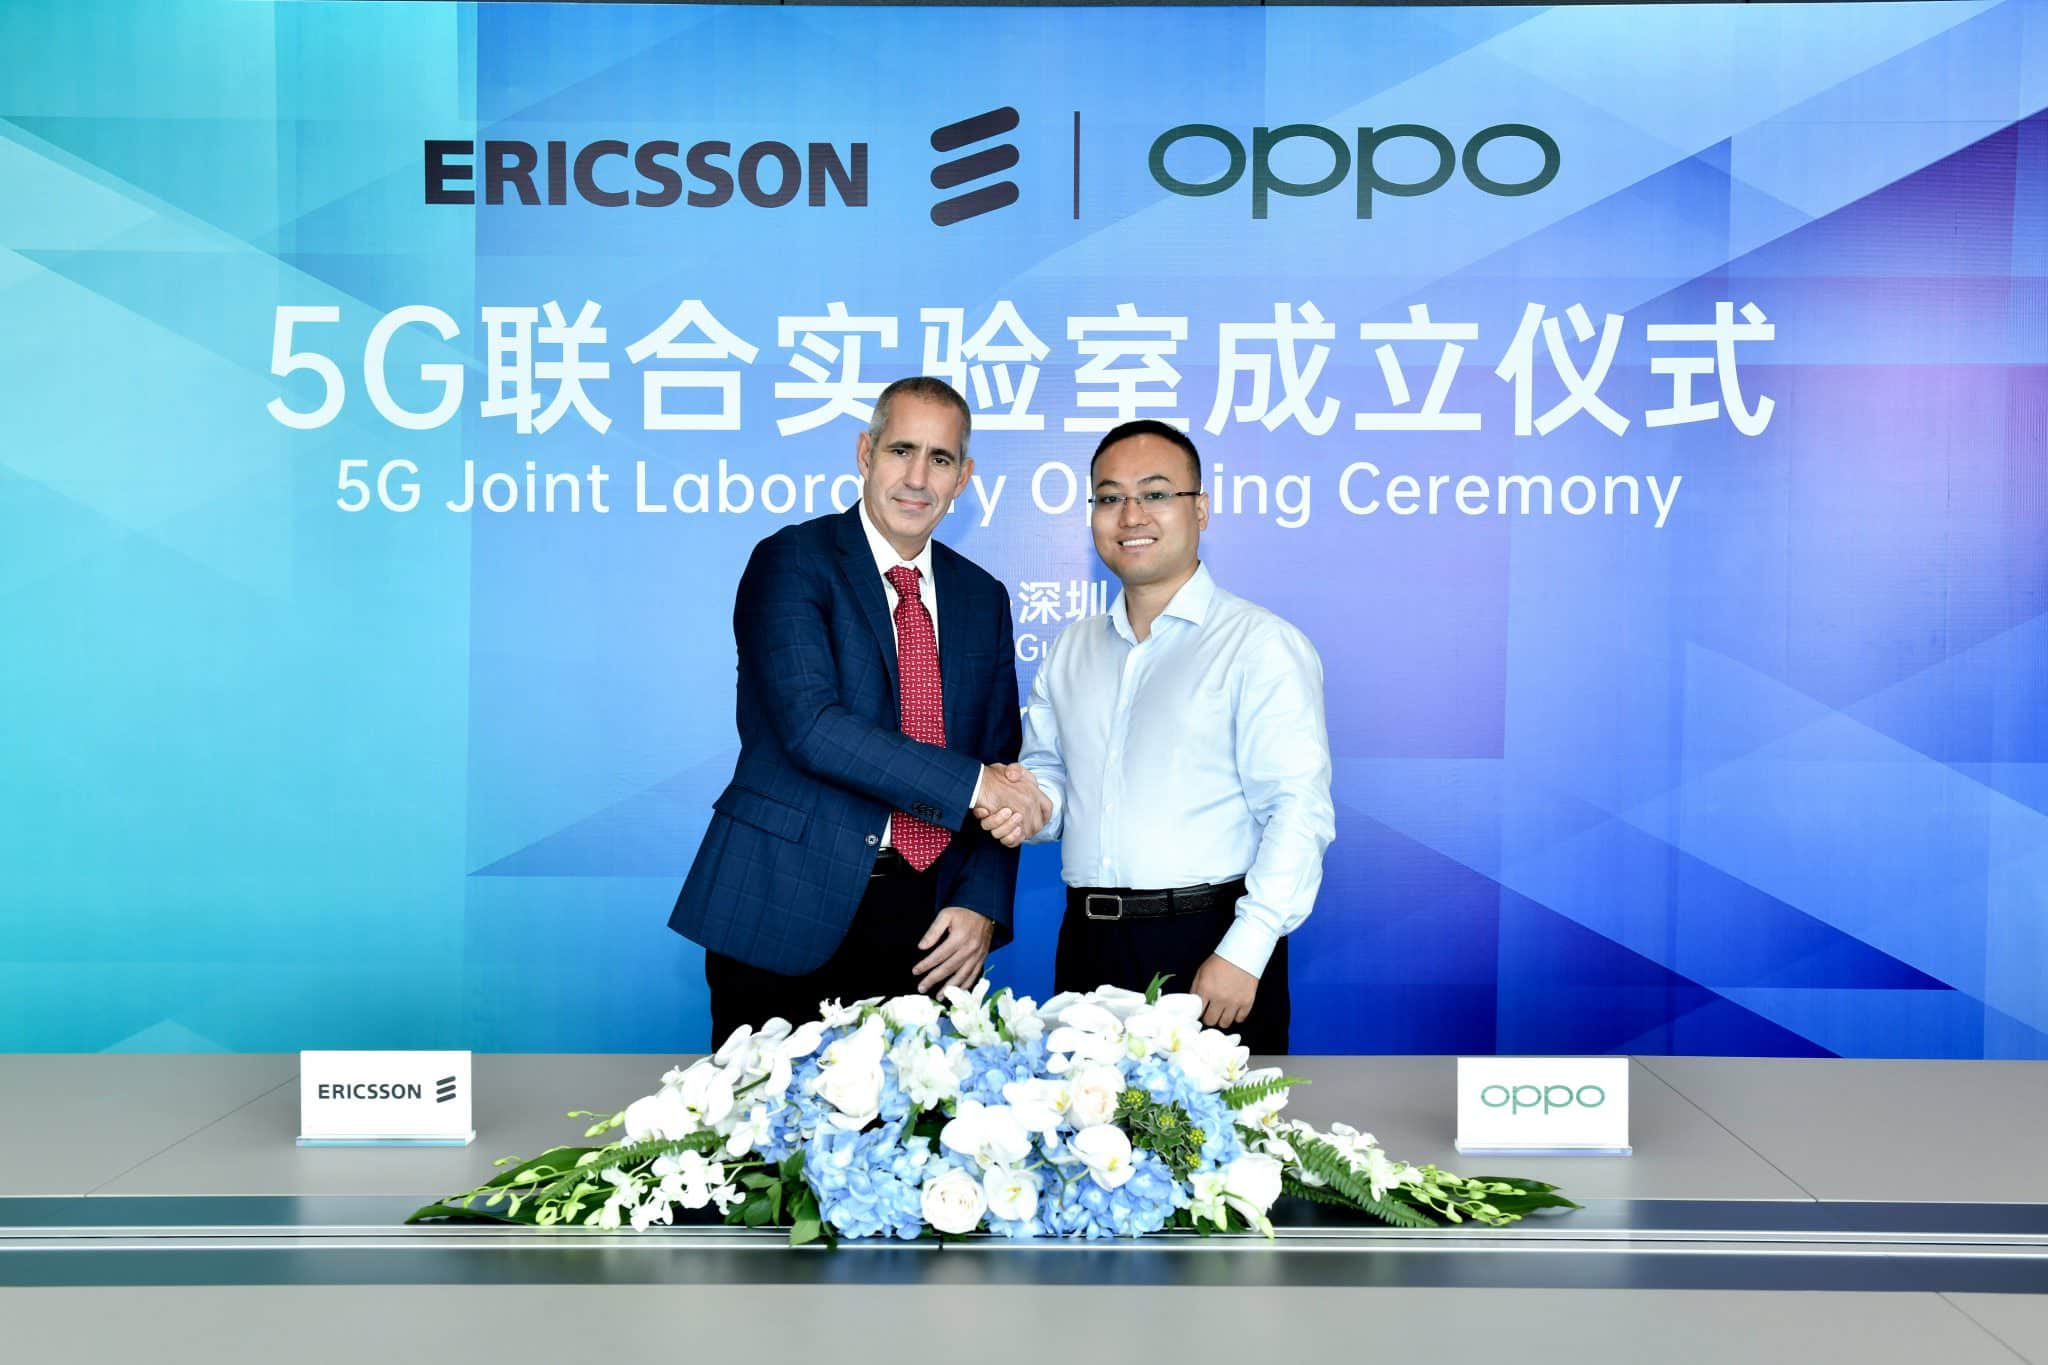 OPPO และ Ericsson ร่วมมือกันเปิดตัวห้องปฏิบัติการนวัตกรรม 5G 1